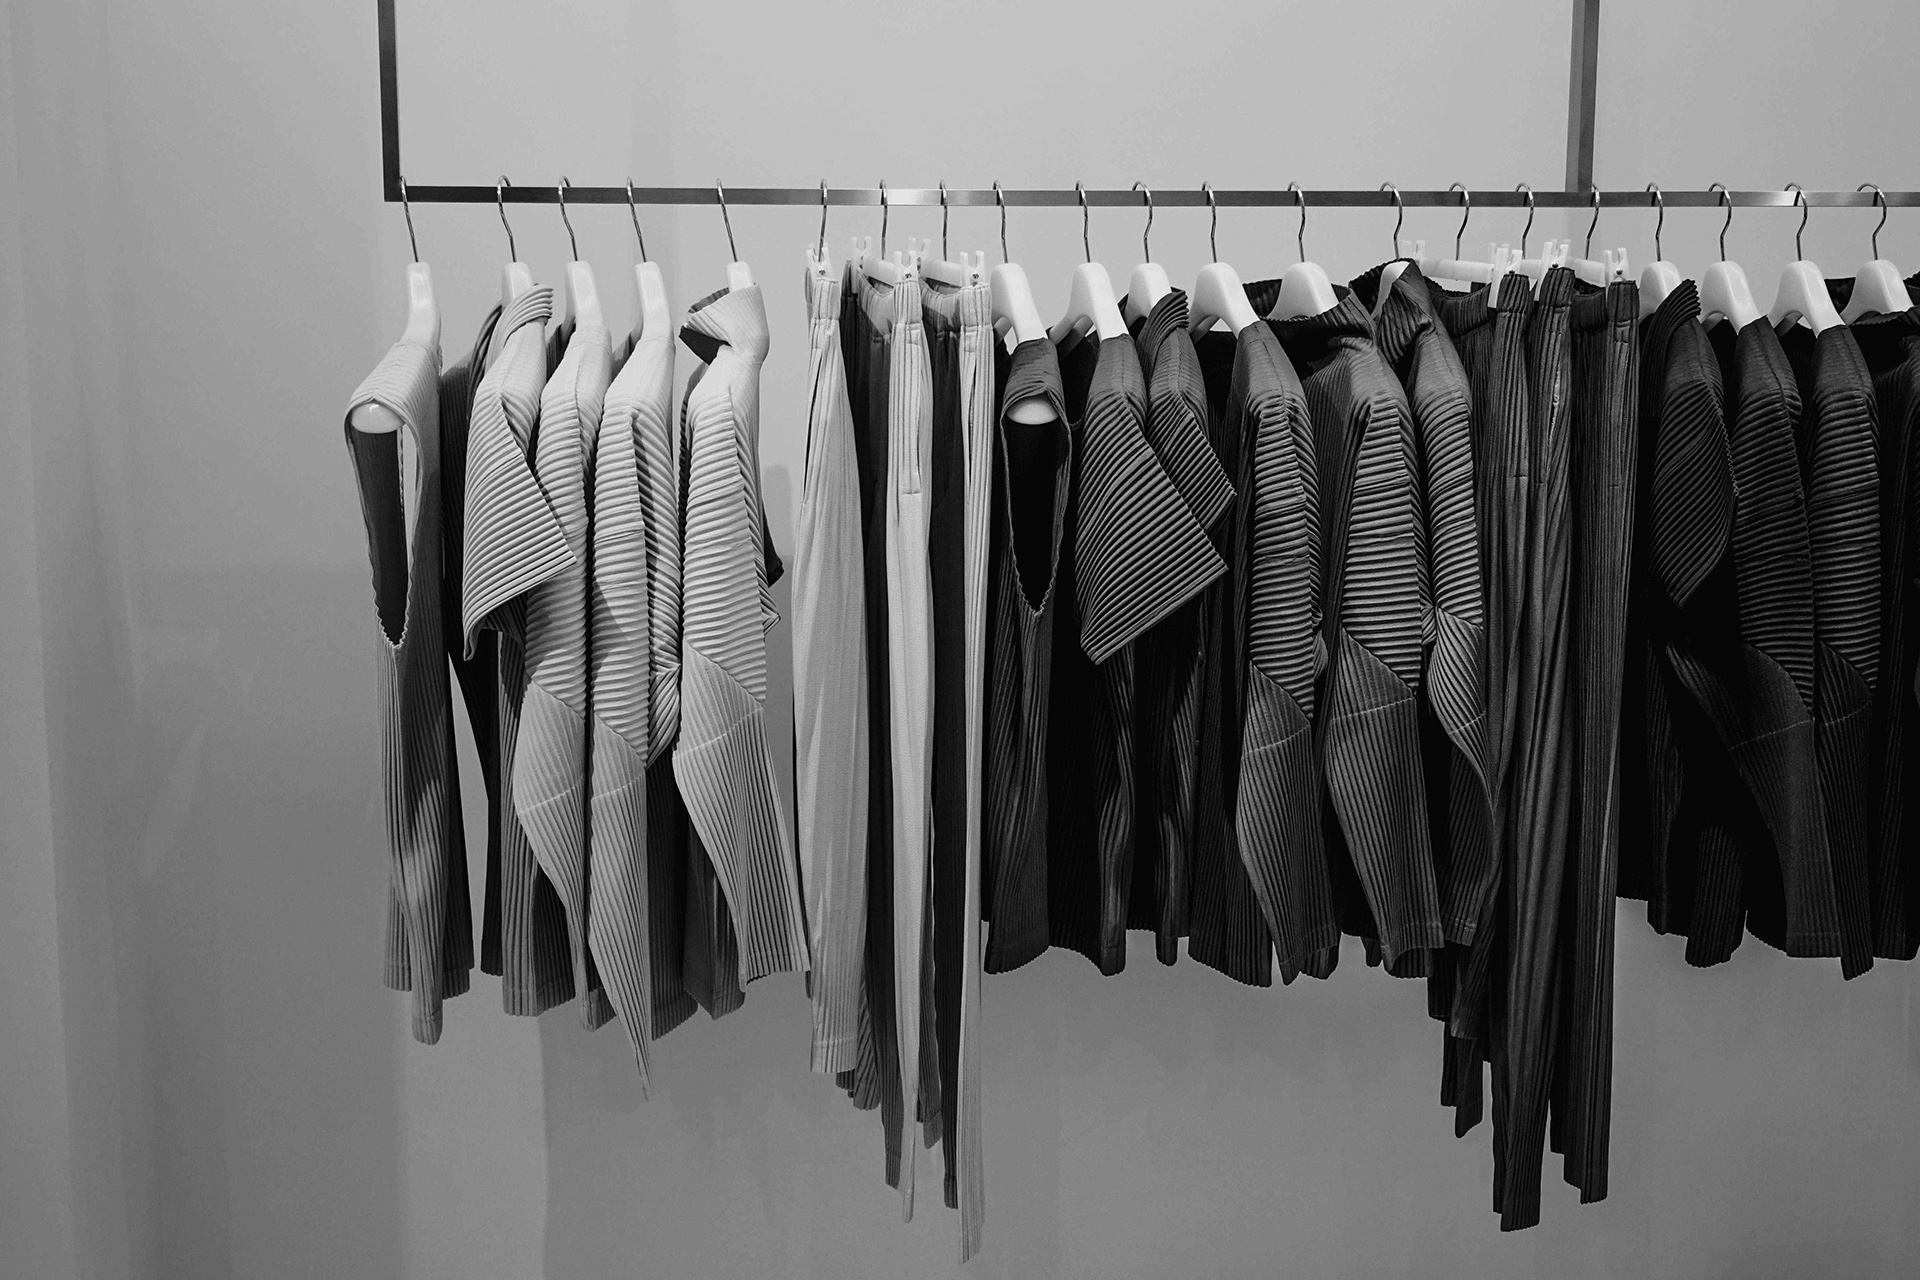 Premier Precipice single Cum refaci culorile hainelor inchise: puneti-le in otet